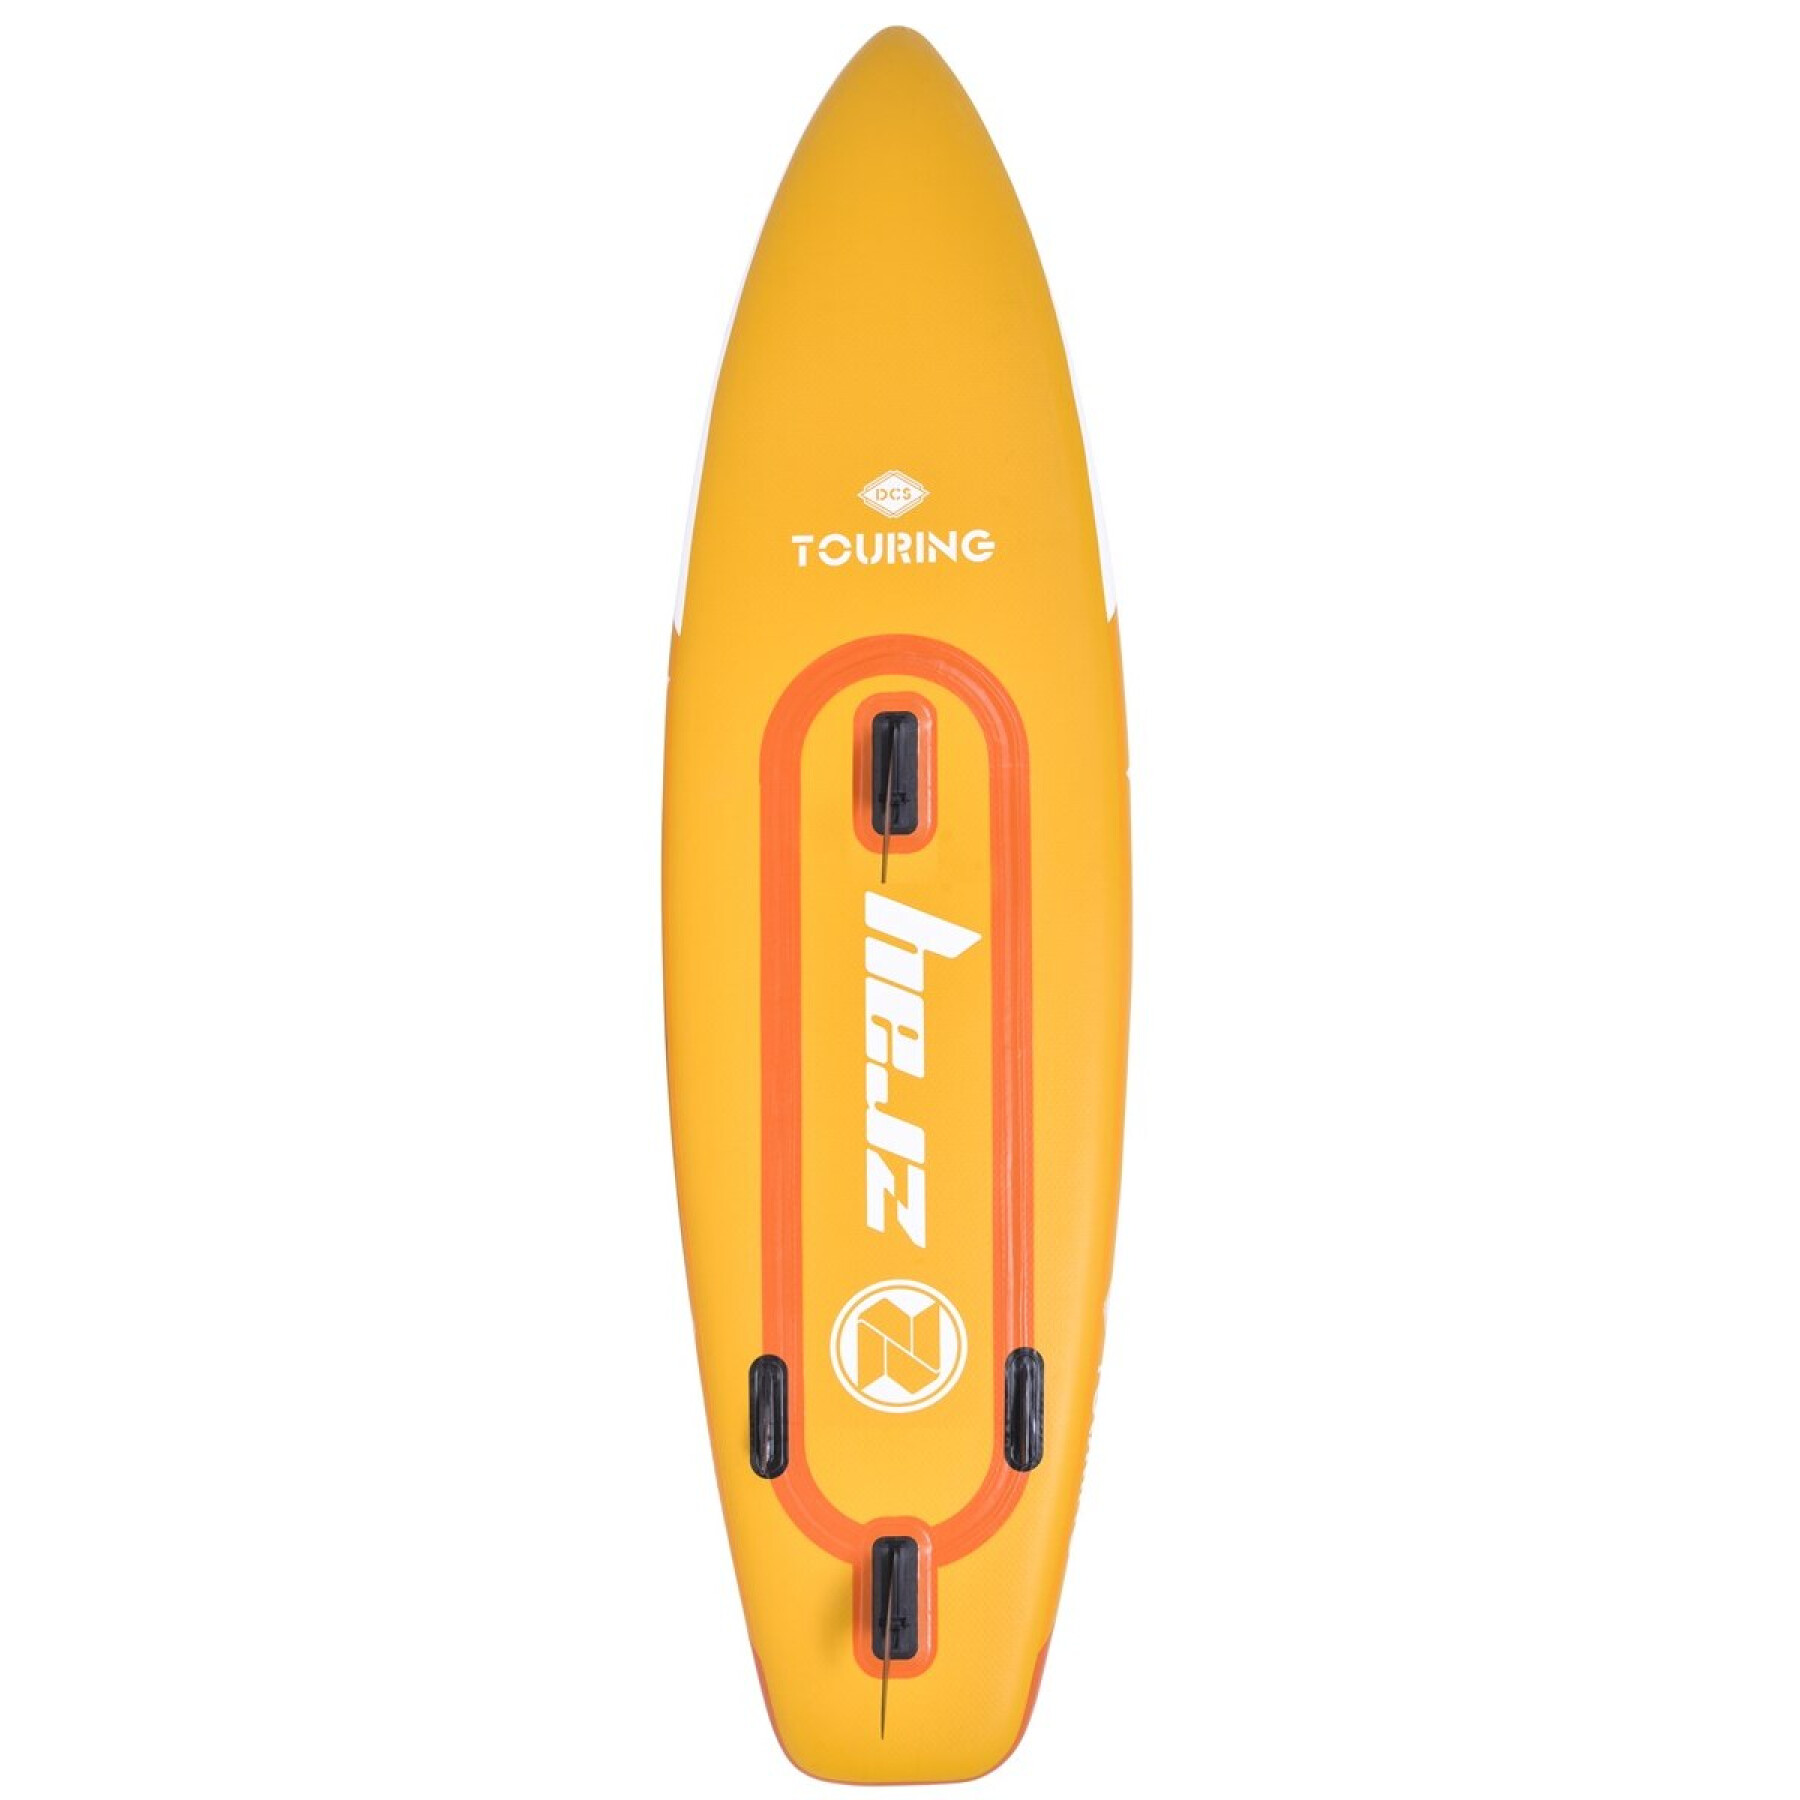 Stand-up paddle hinchable Zray Fury F1 10'4''